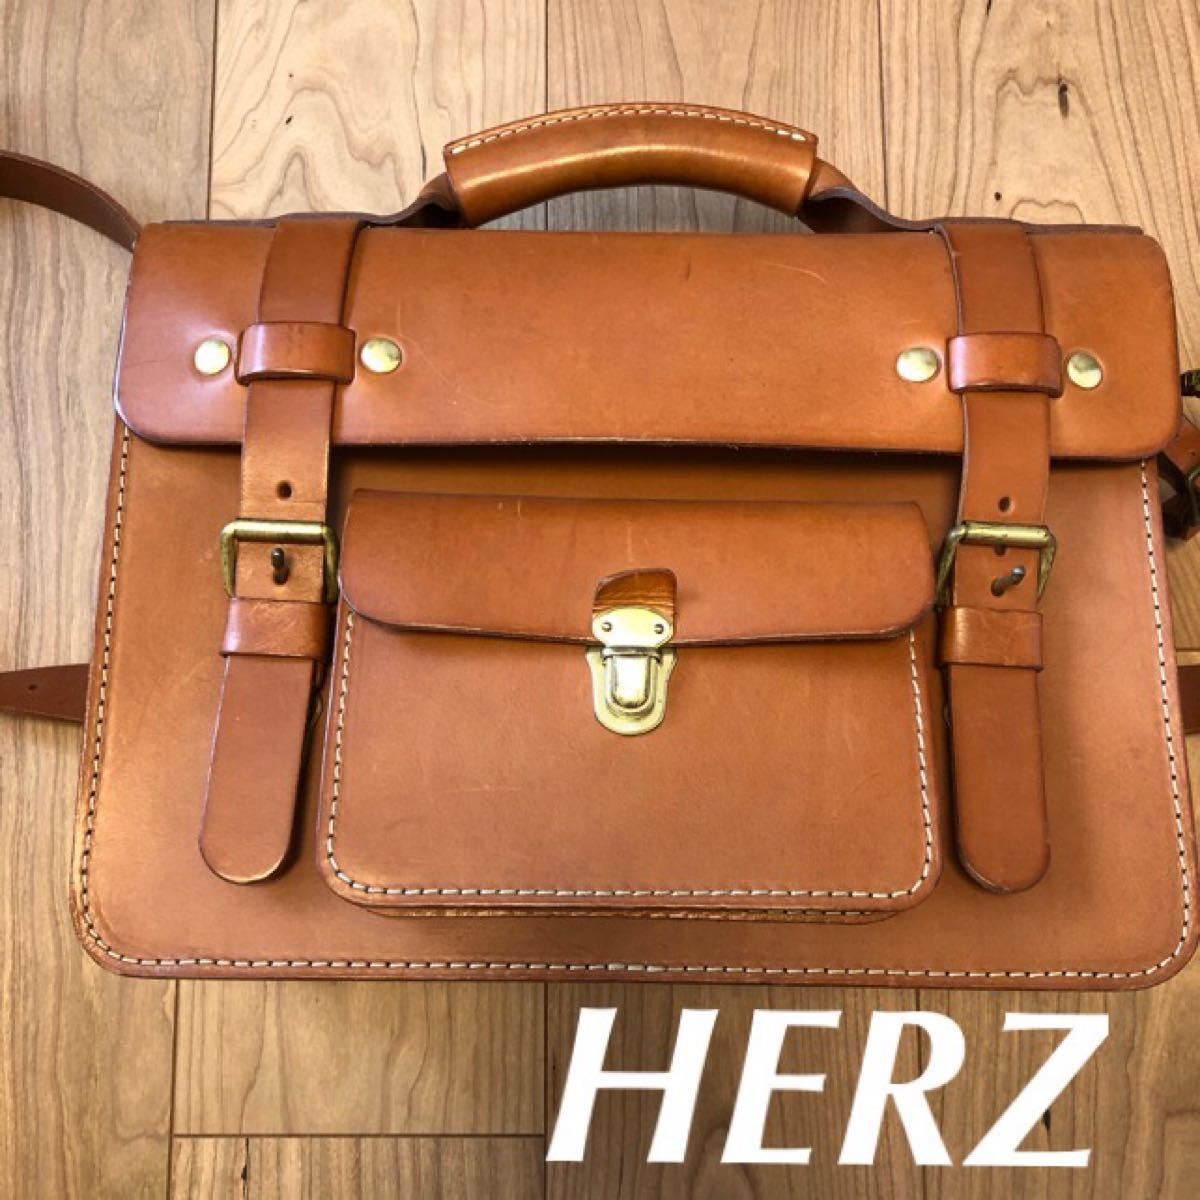 Herz 学生鞄風 2wayビジネスバッグ(BC-16)キャメル色 メンズ